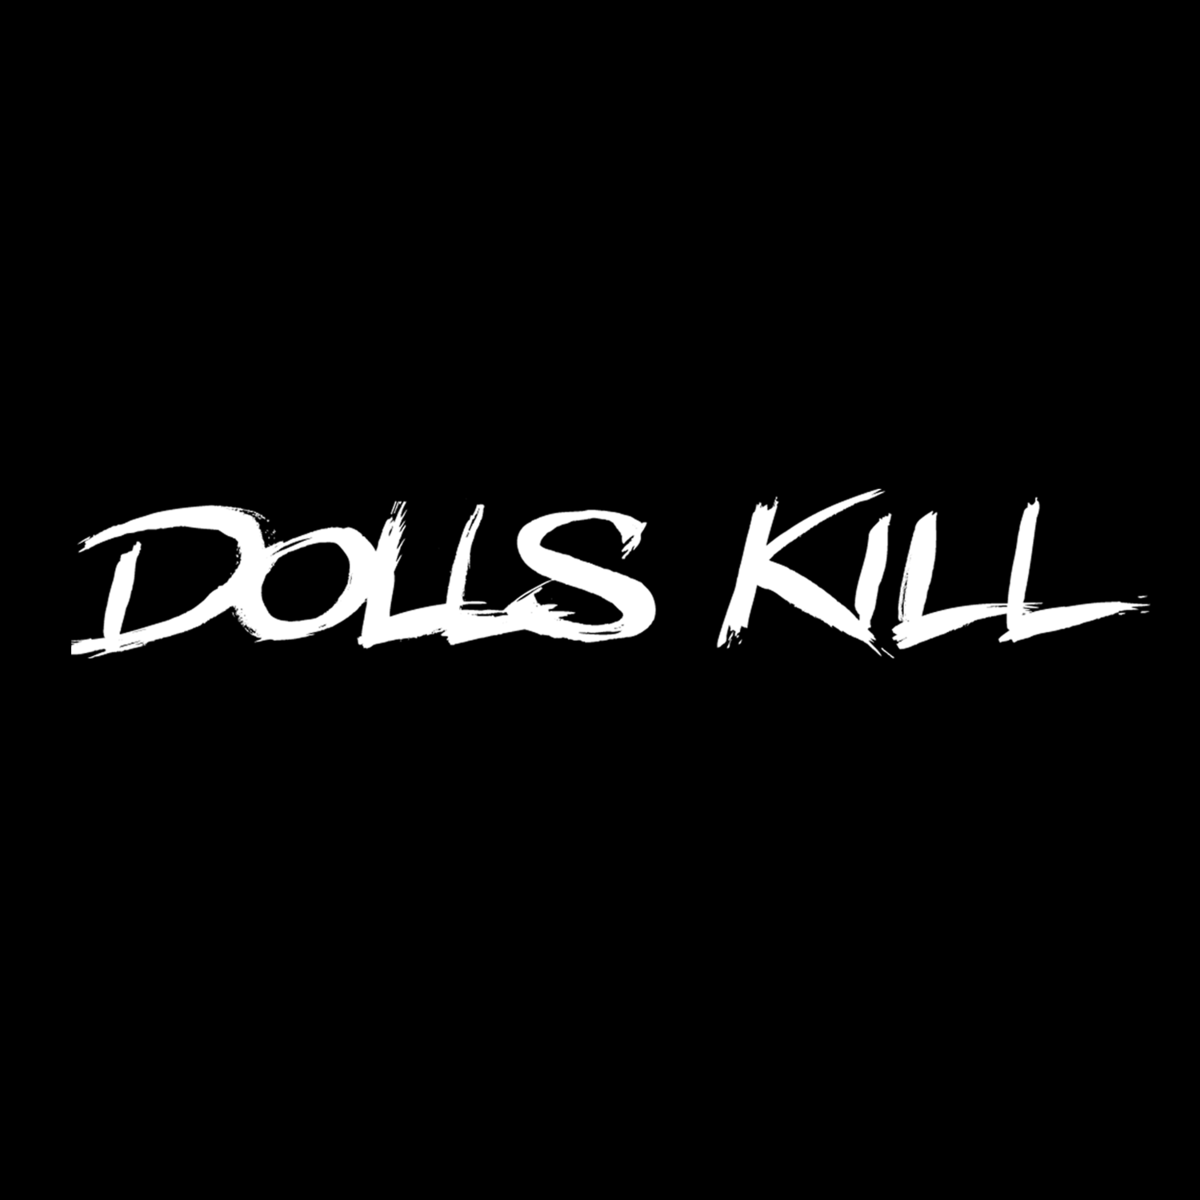 Dolls Kill. Dolls Kill интернет магазин. Dollskill магазин. Доллс кил лого.